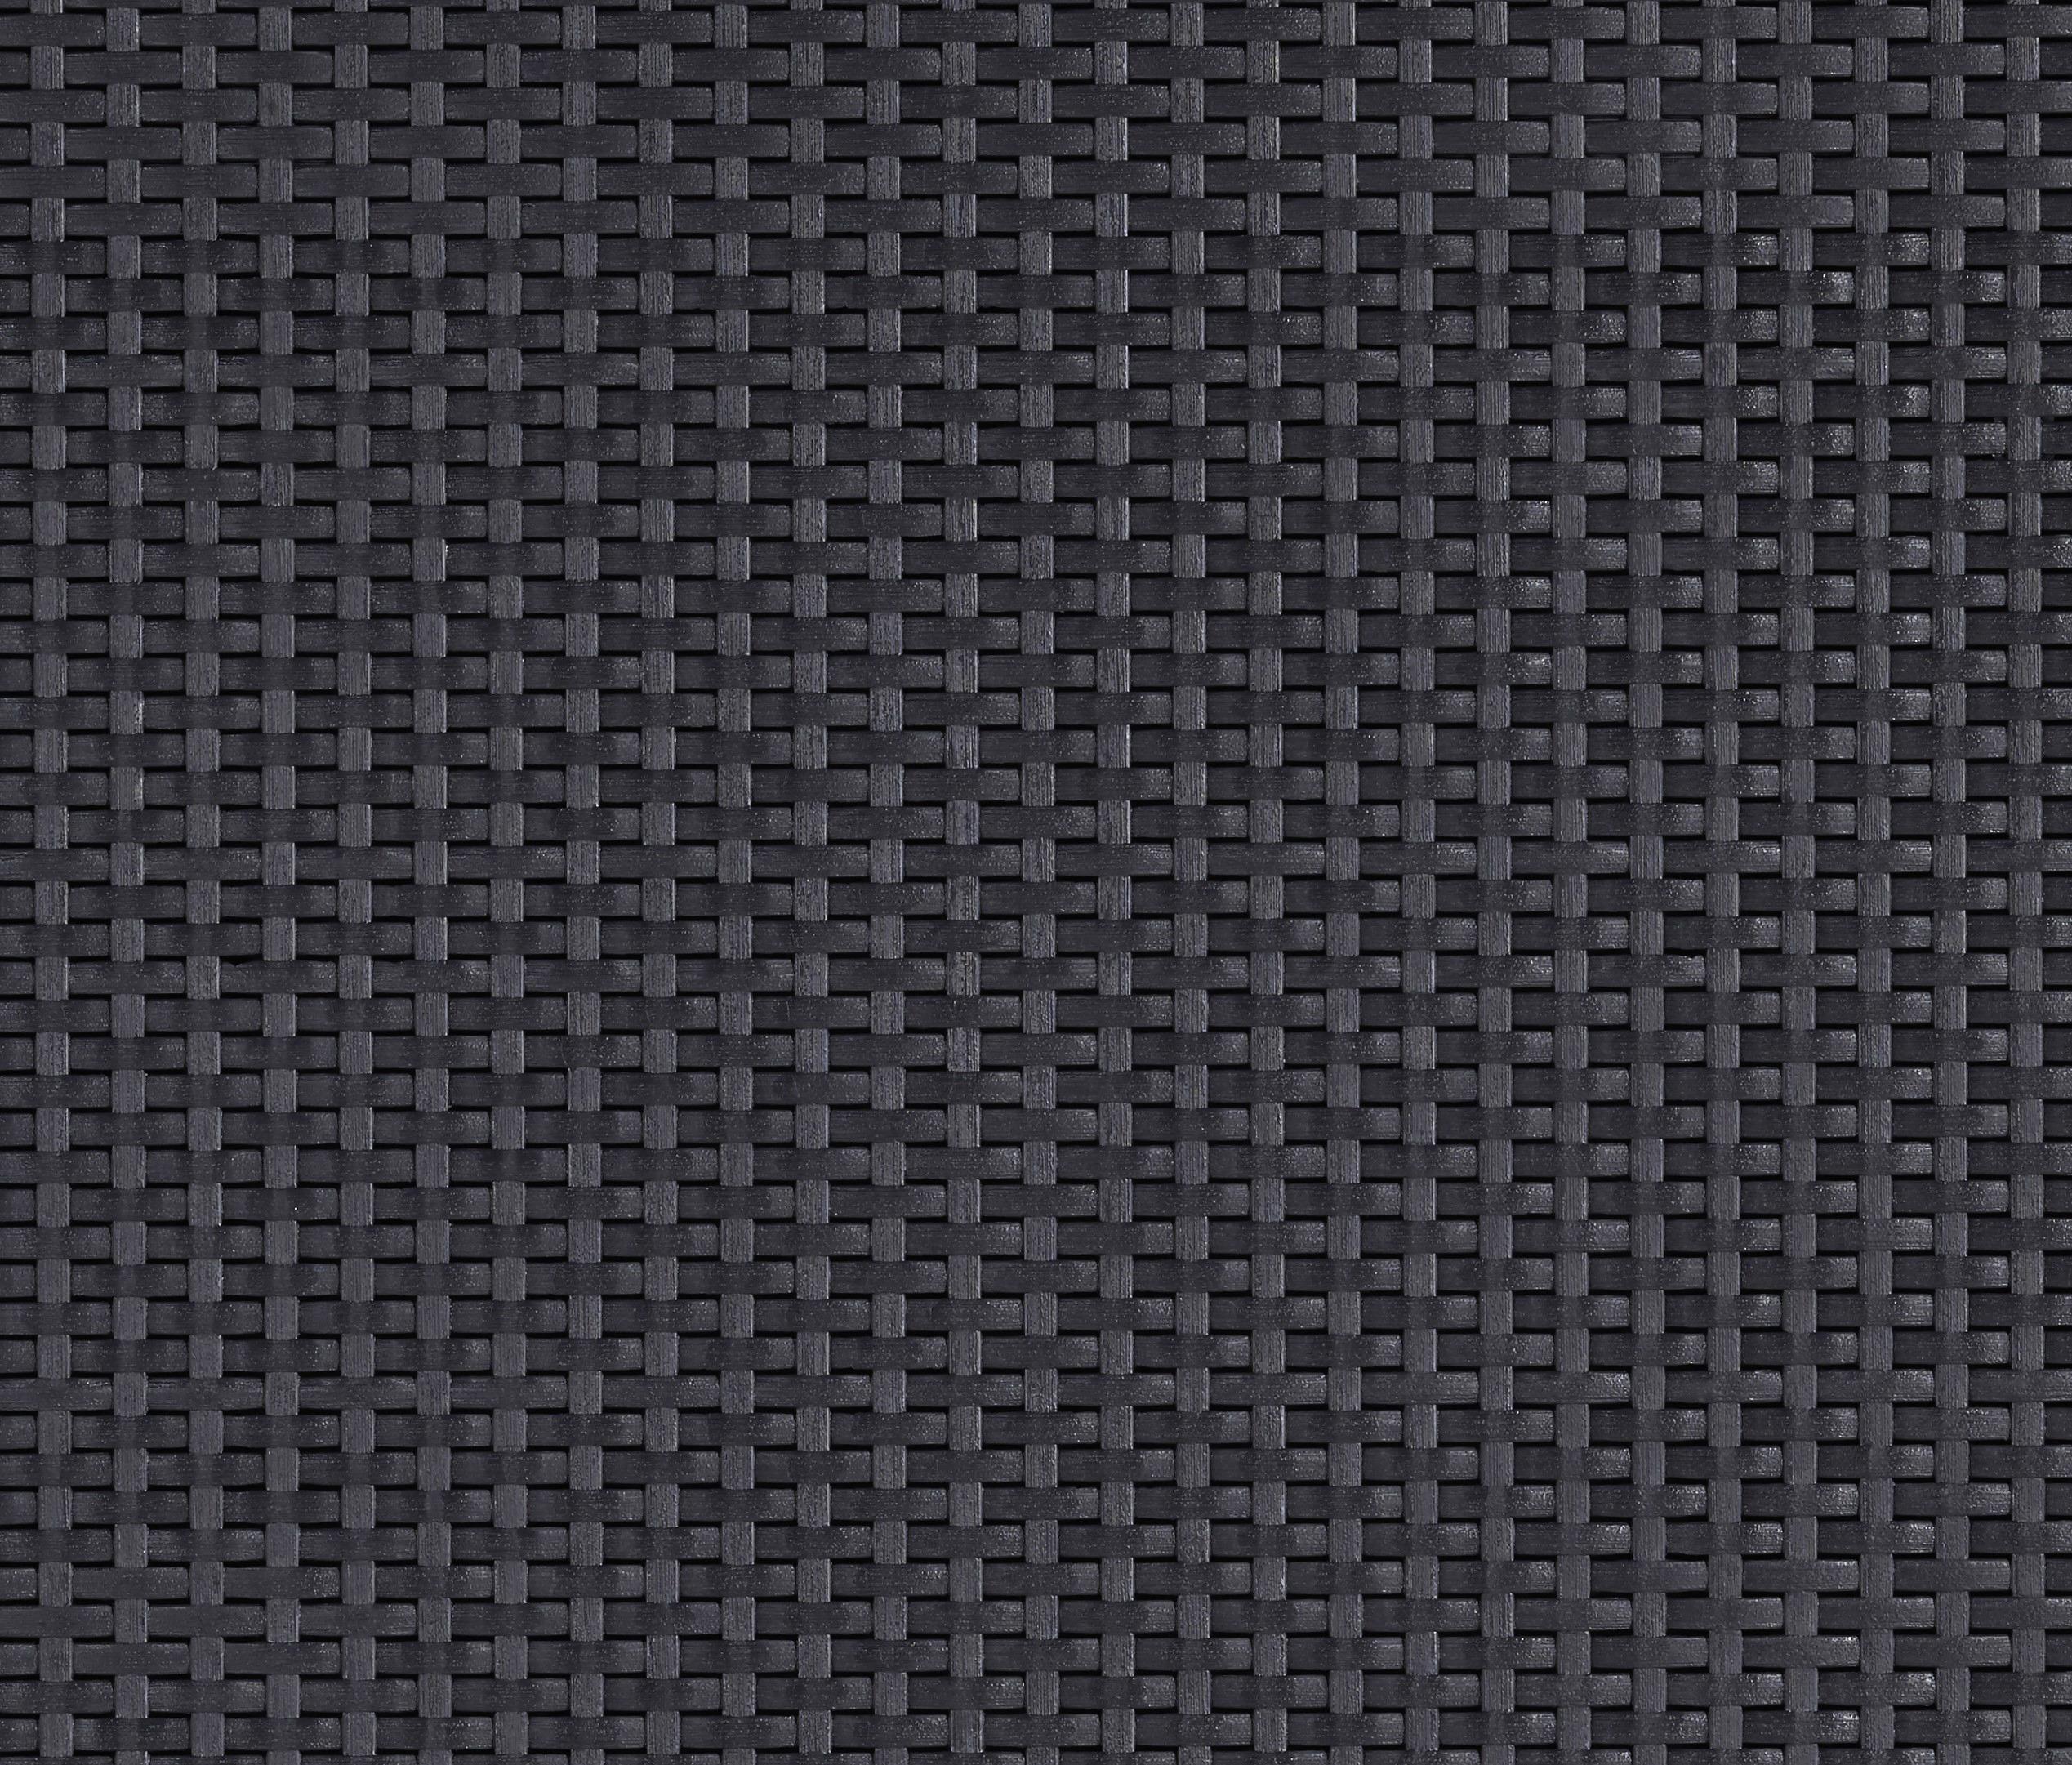 Kühlbox 40 Liter Ice Cube, Graphitfarben - Graphitfarben, MODERN, Kunststoff (42/41/42cm) - Allibert